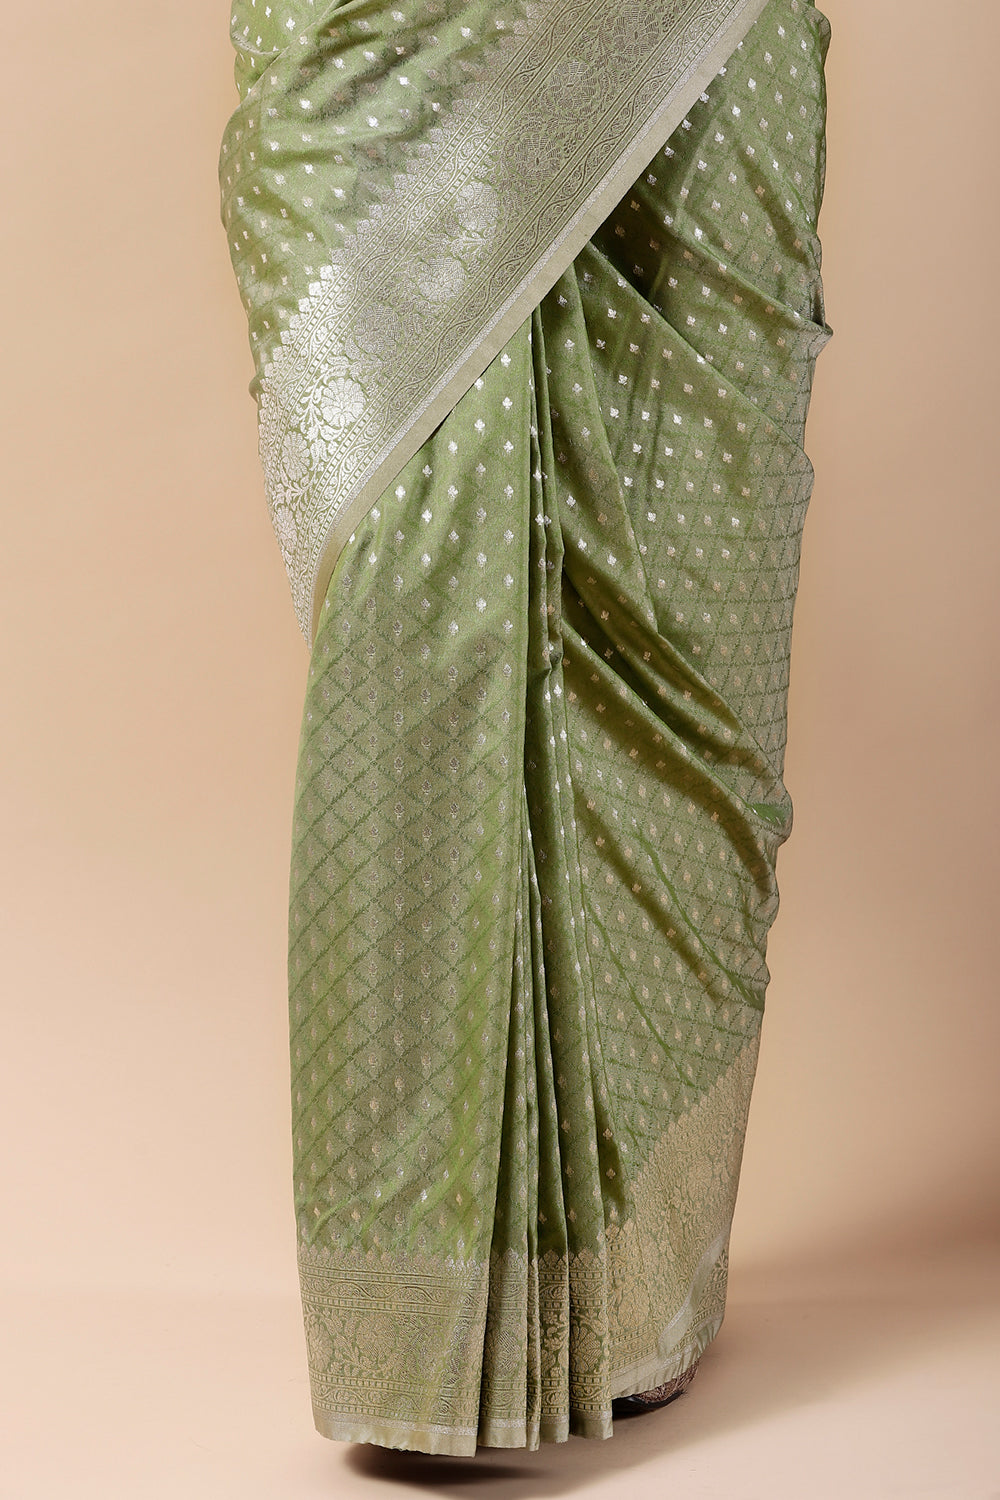 Sage Green Colour Banarsi Silk Weaving Saree.